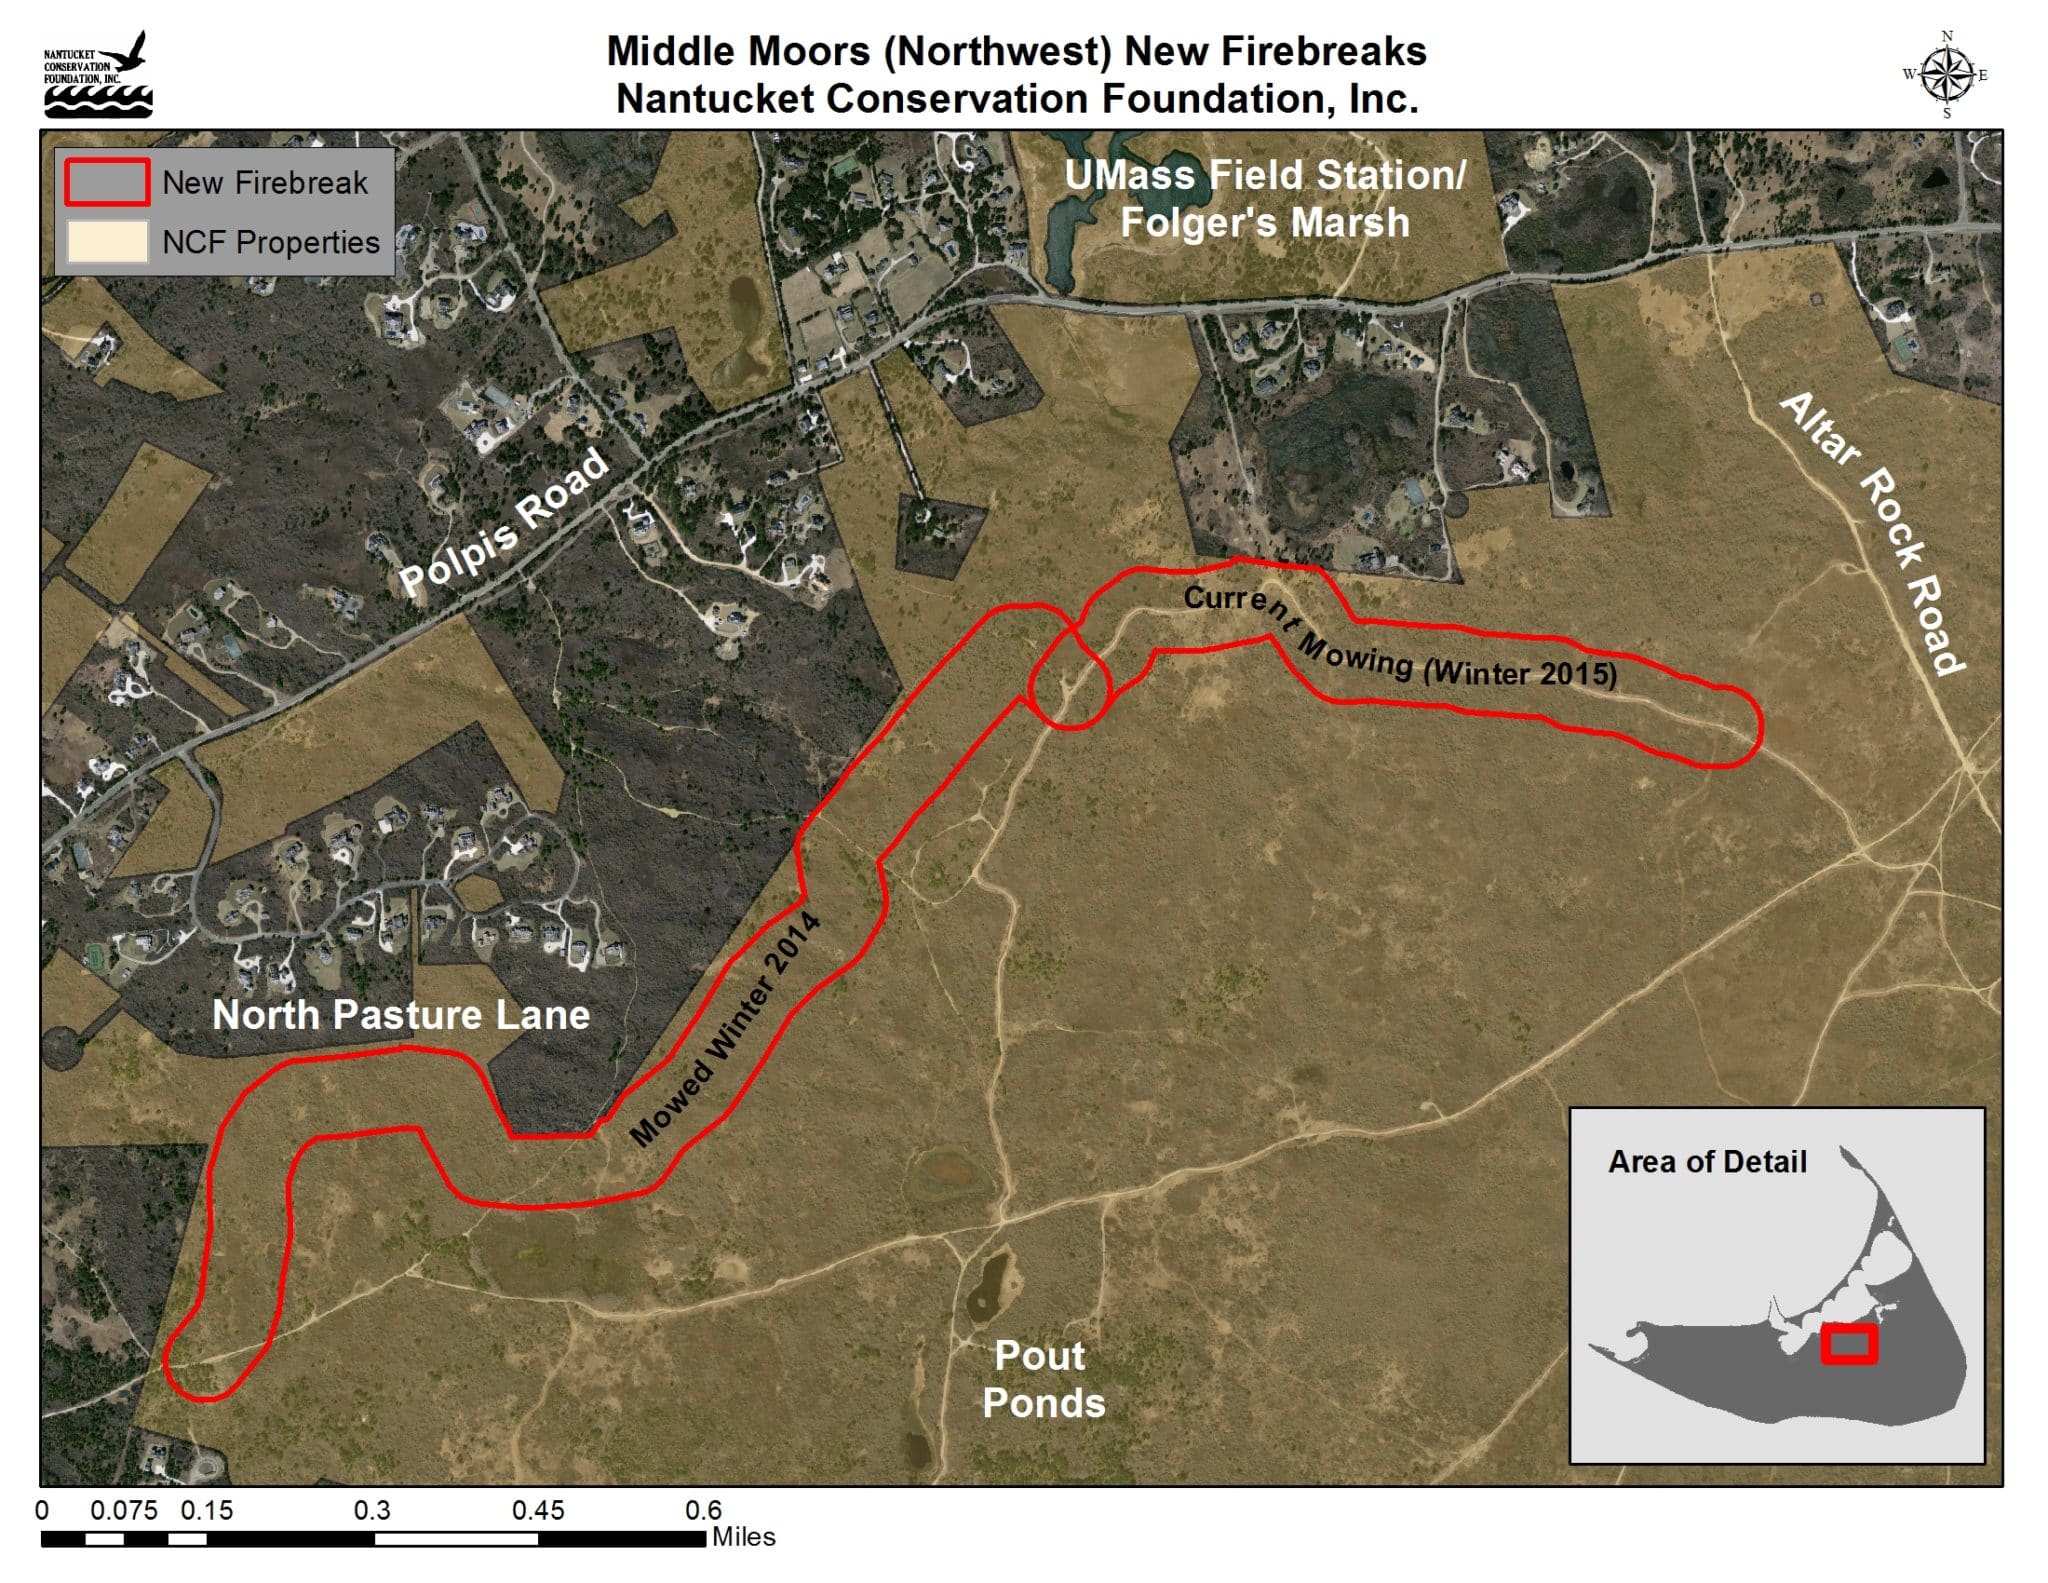 Middle Moors E & W Firebreak Map for Blog Feb 2015